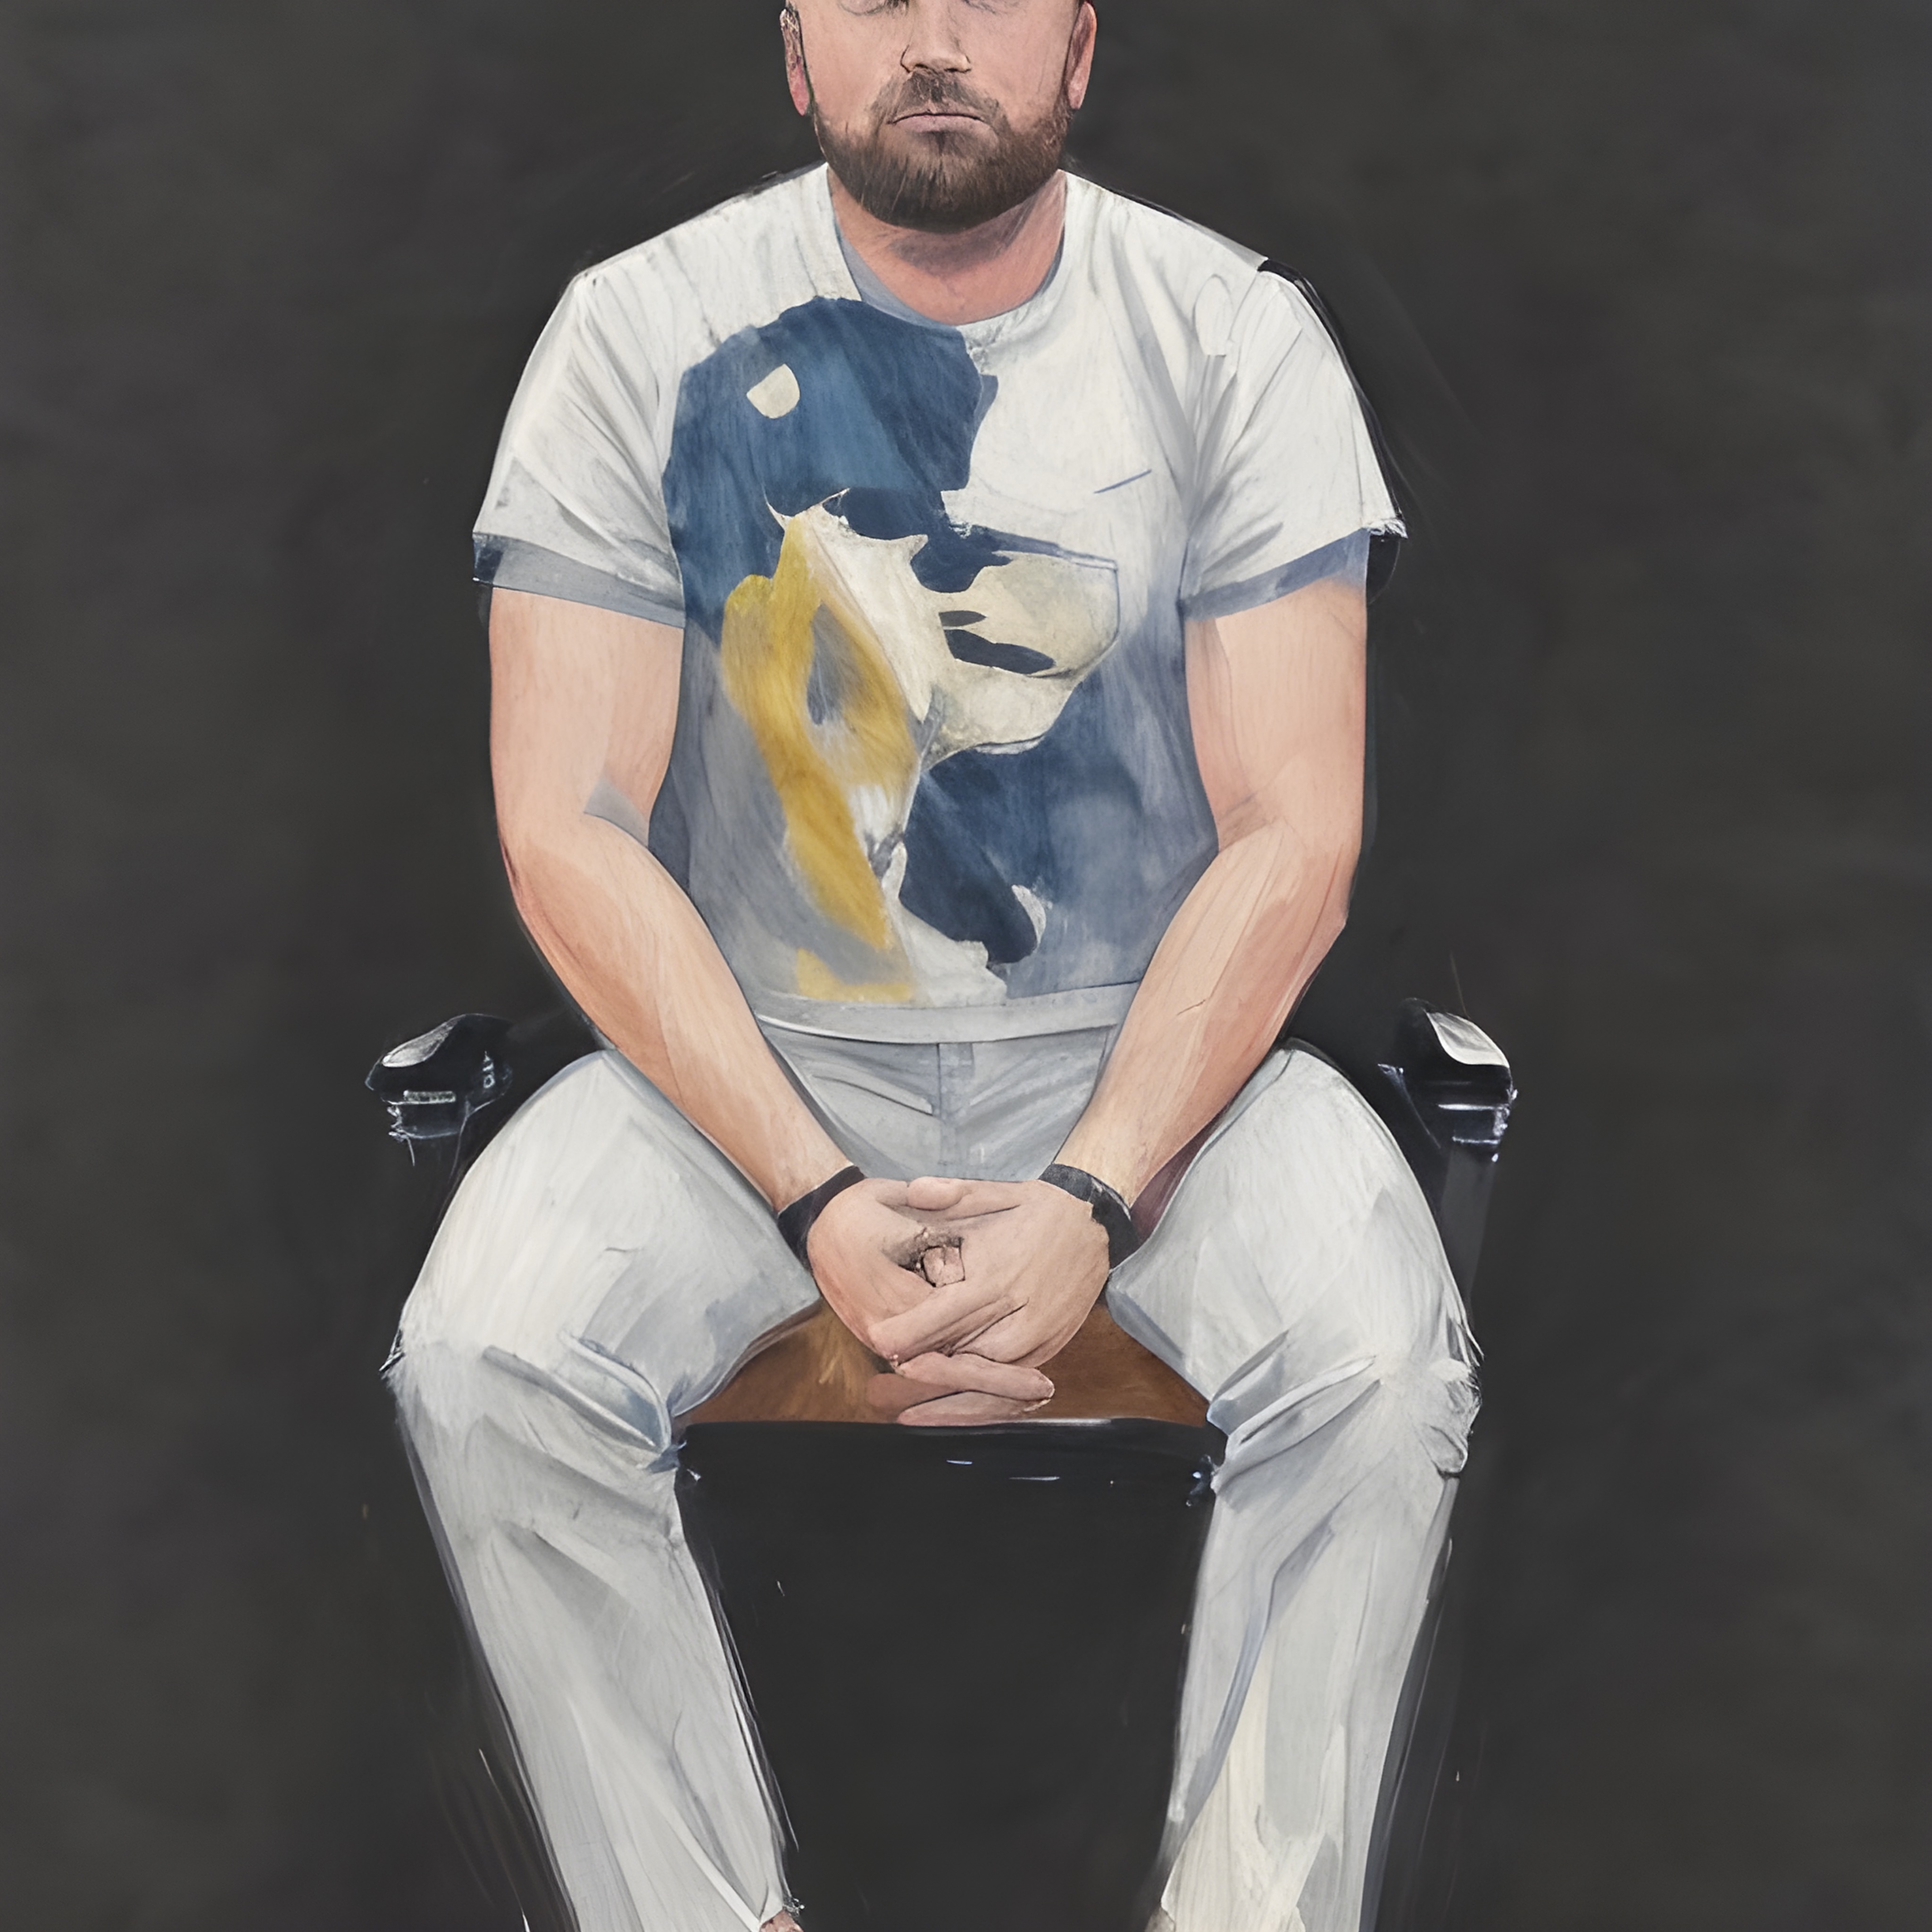 A portrait of Evan Ottinger